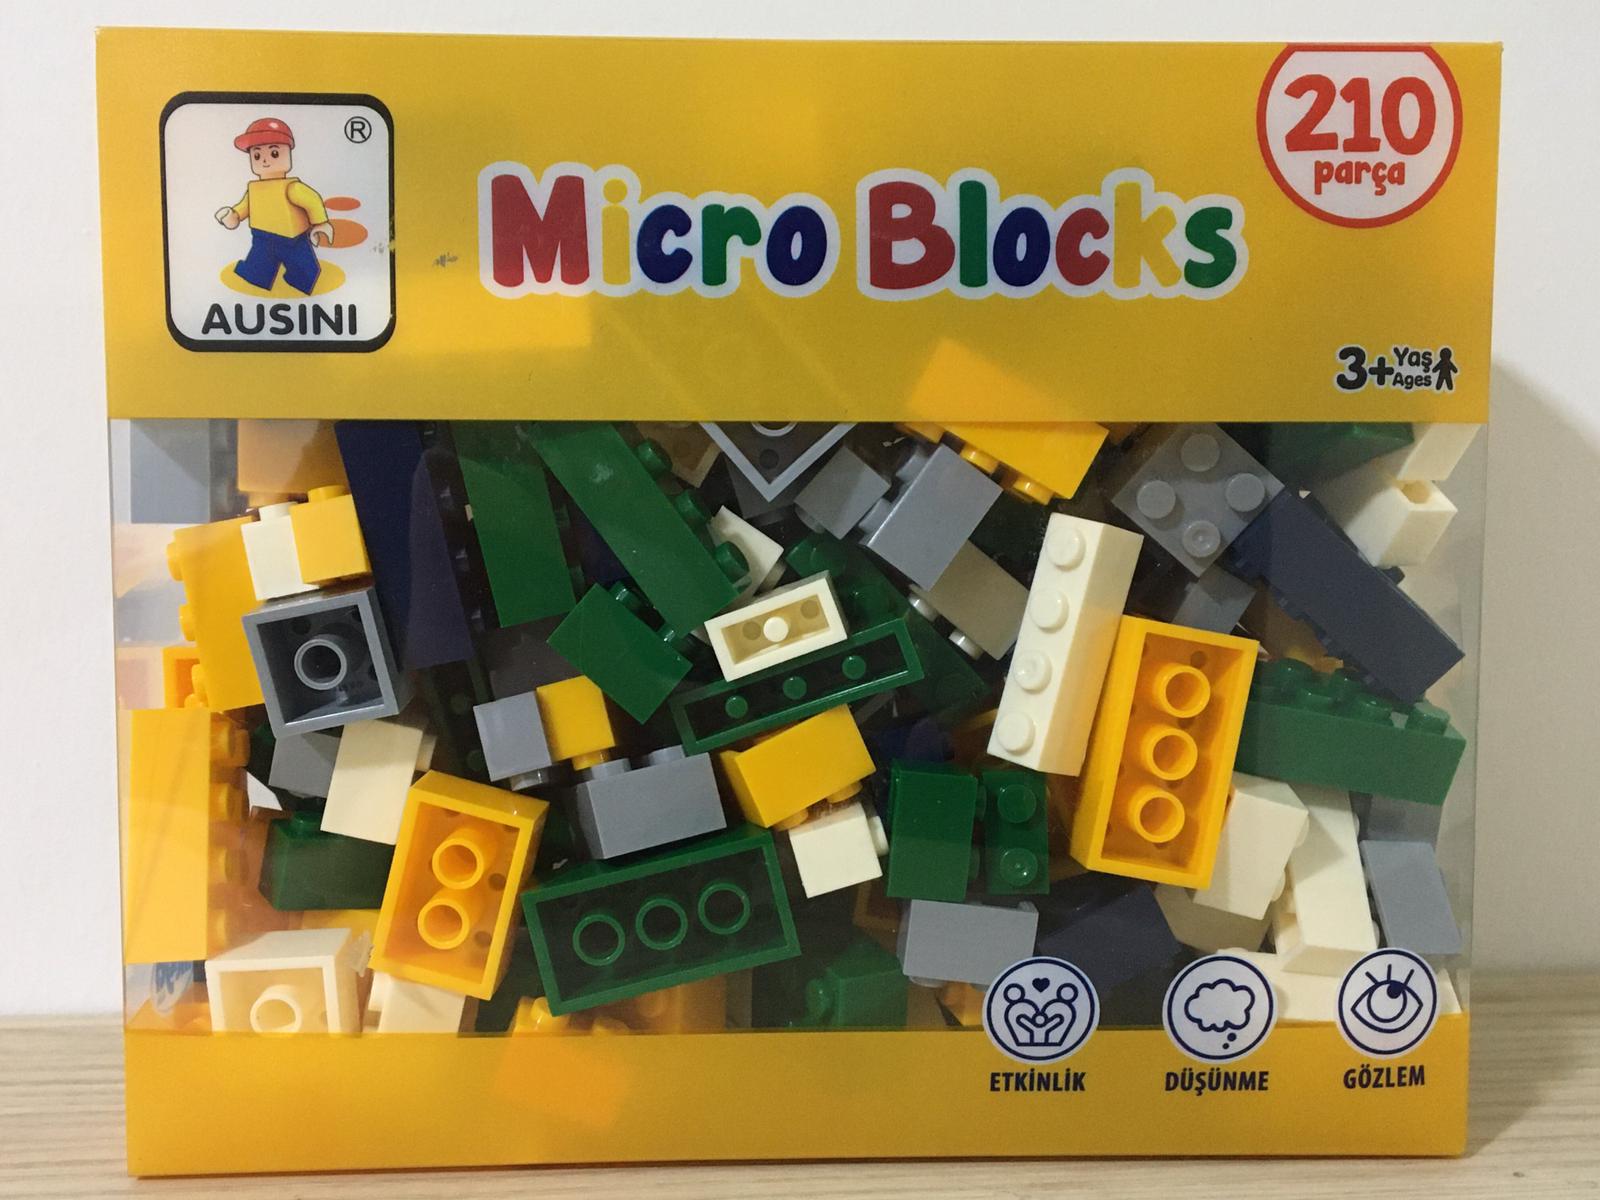 AUSINI-MİCRO BLOCKS-210 PARÇA-ORJİNAL-LEGO-RENKLİ